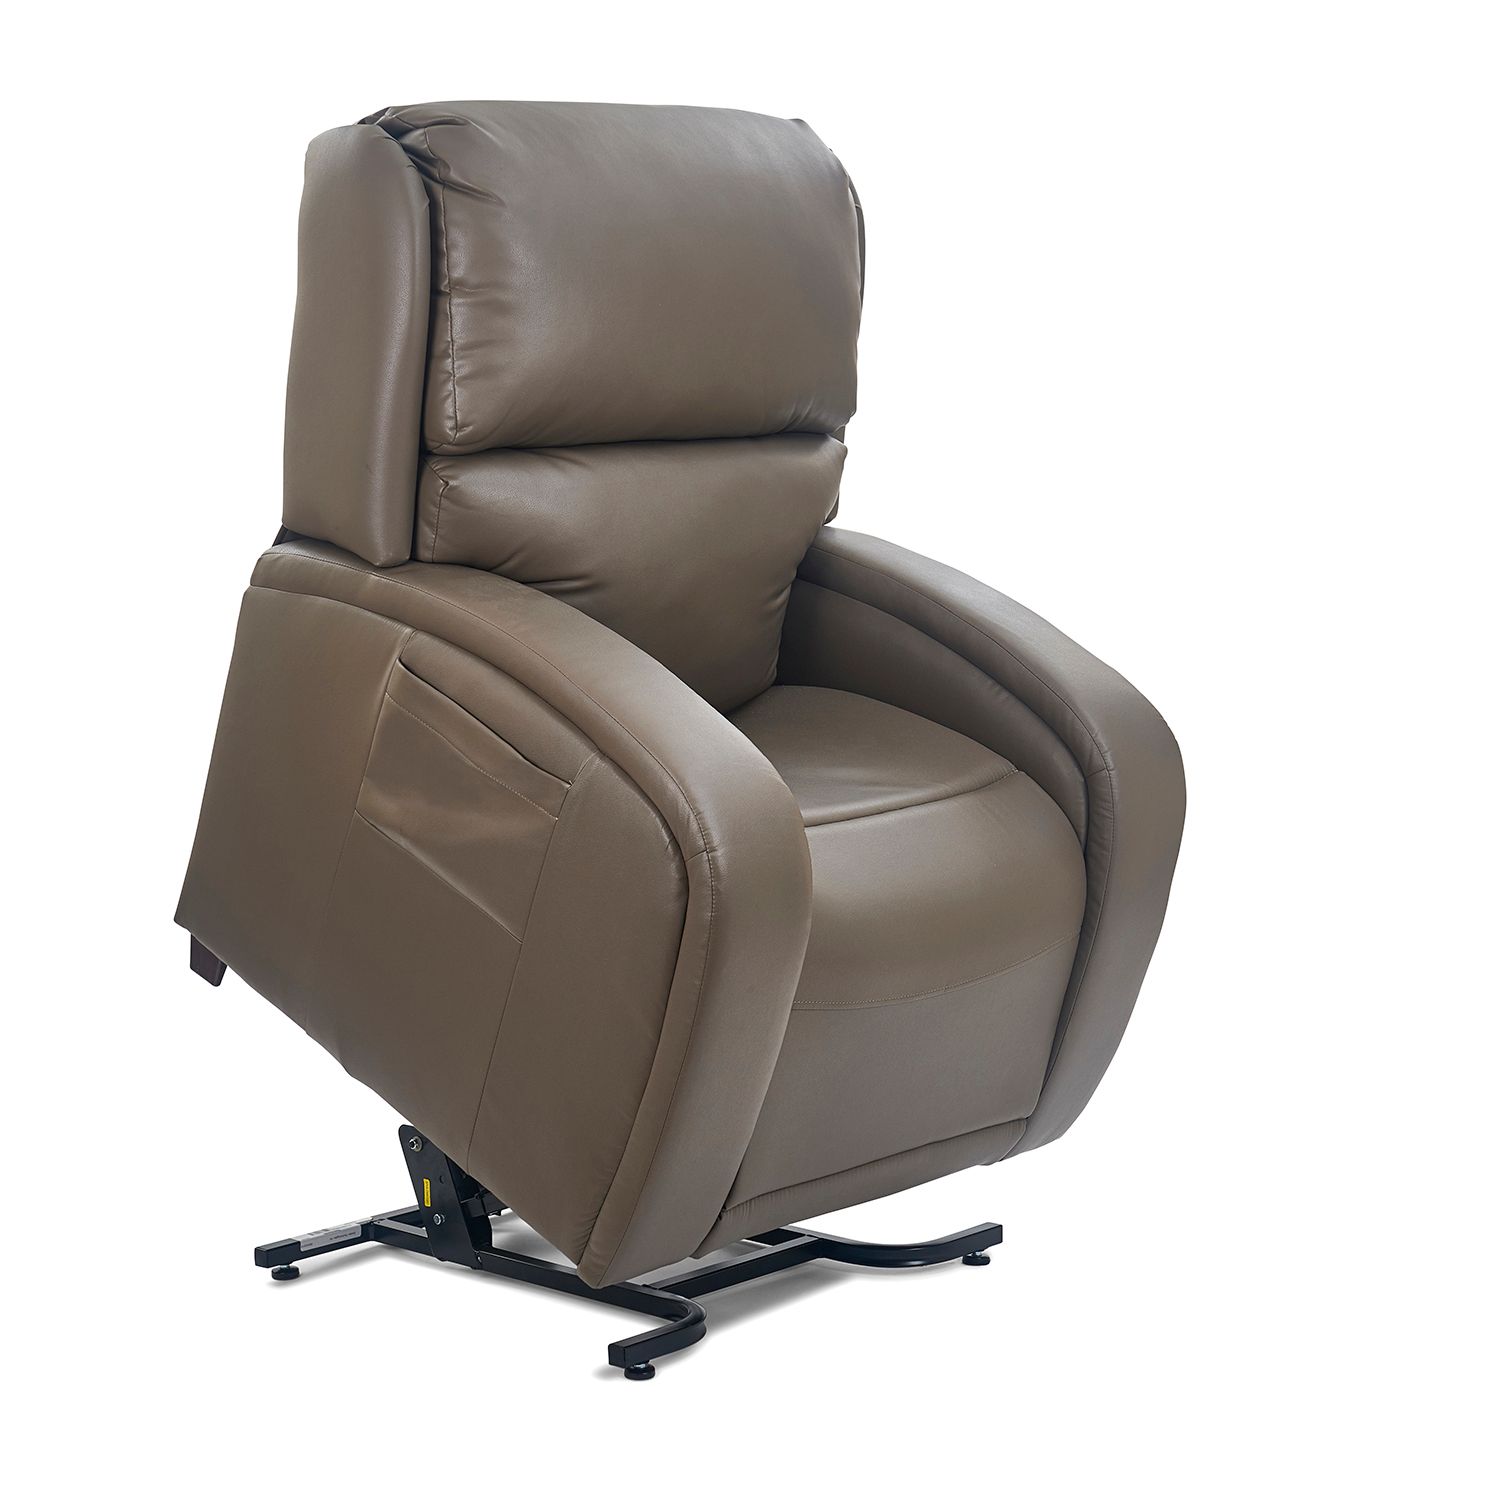 Indio Golden Tech lift chair recliner twilight ezsleeper cloud viva relaxer maxi-comfort